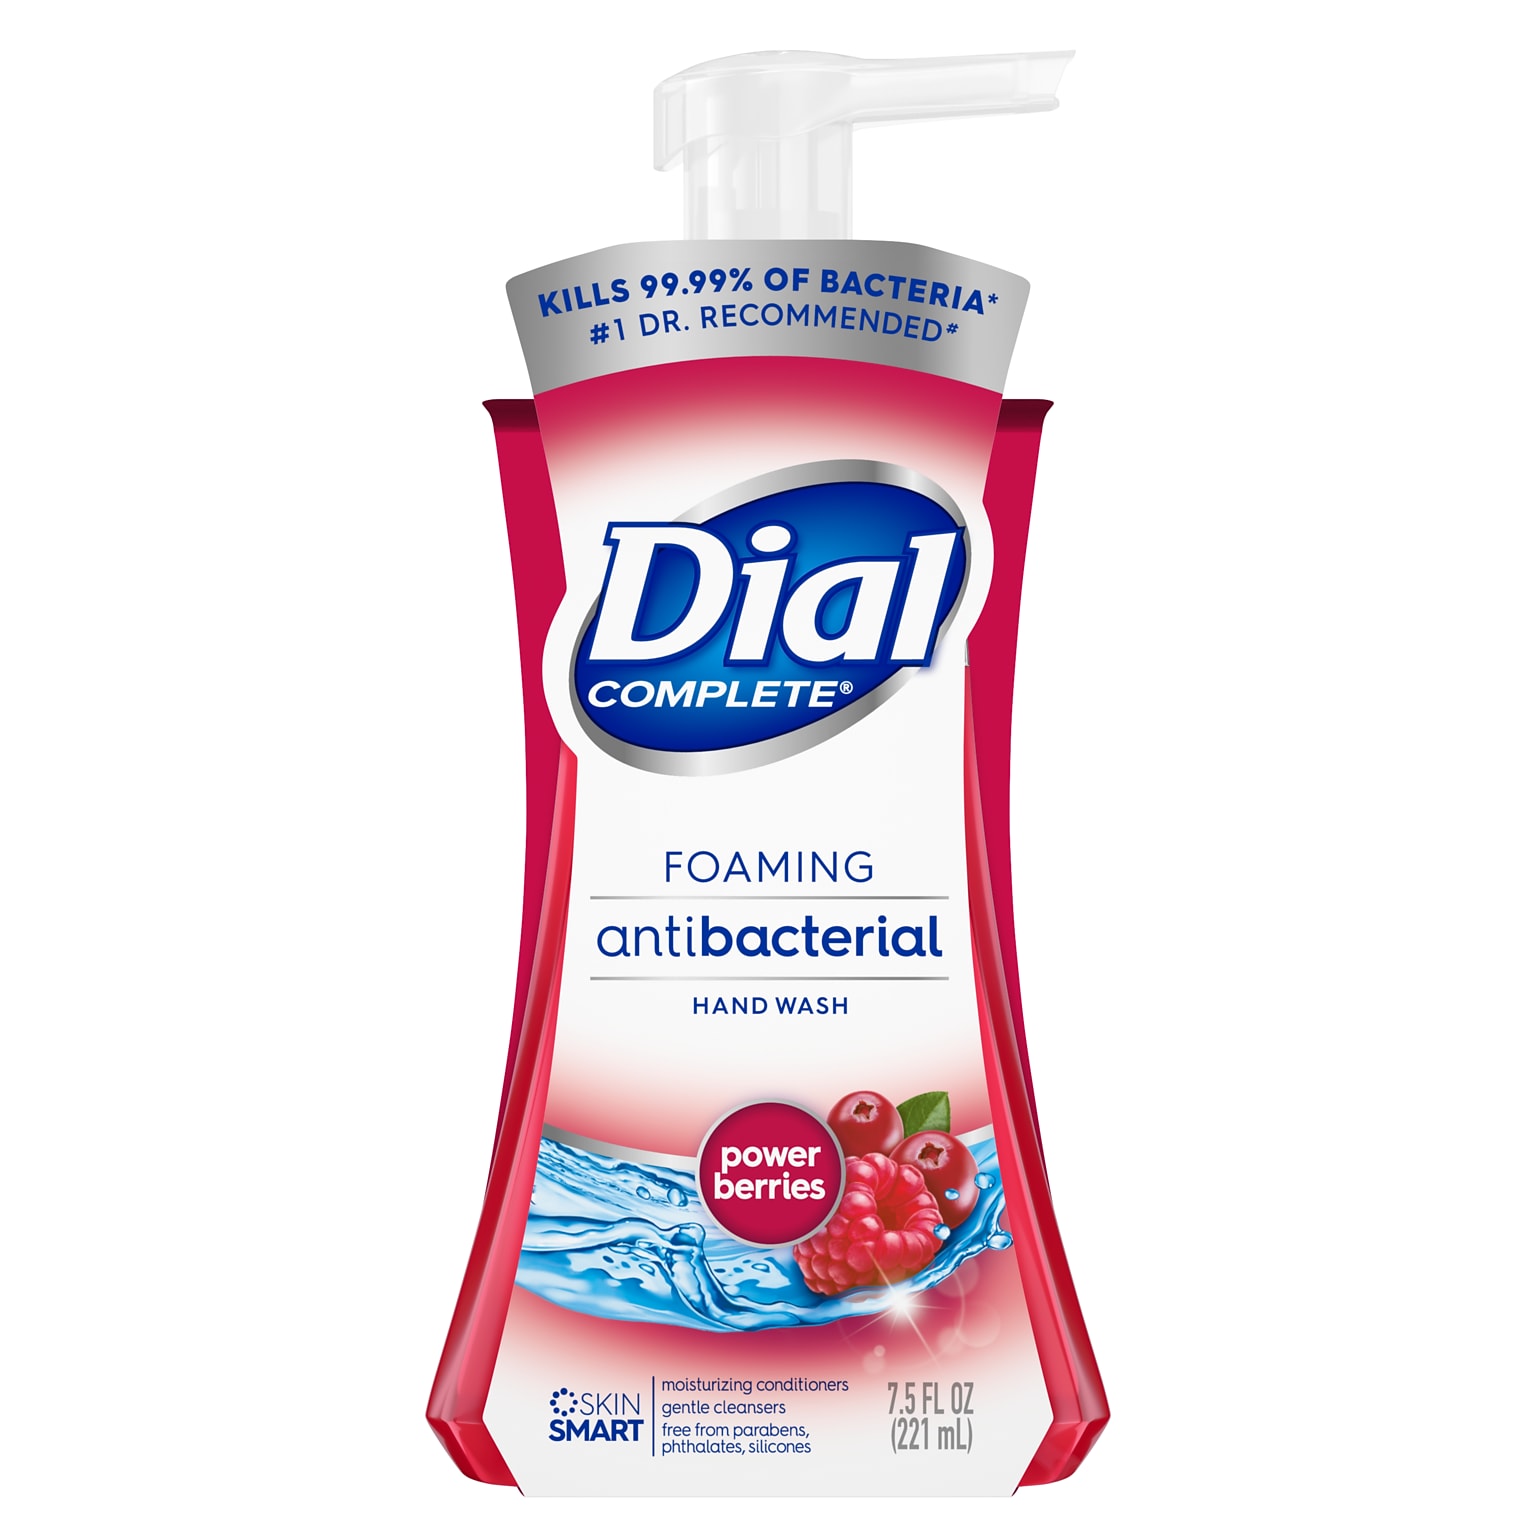 Dial Complete Antibacterial Foaming Hand Soap, Power Berries, 7.5 Oz. (DIA 03016)